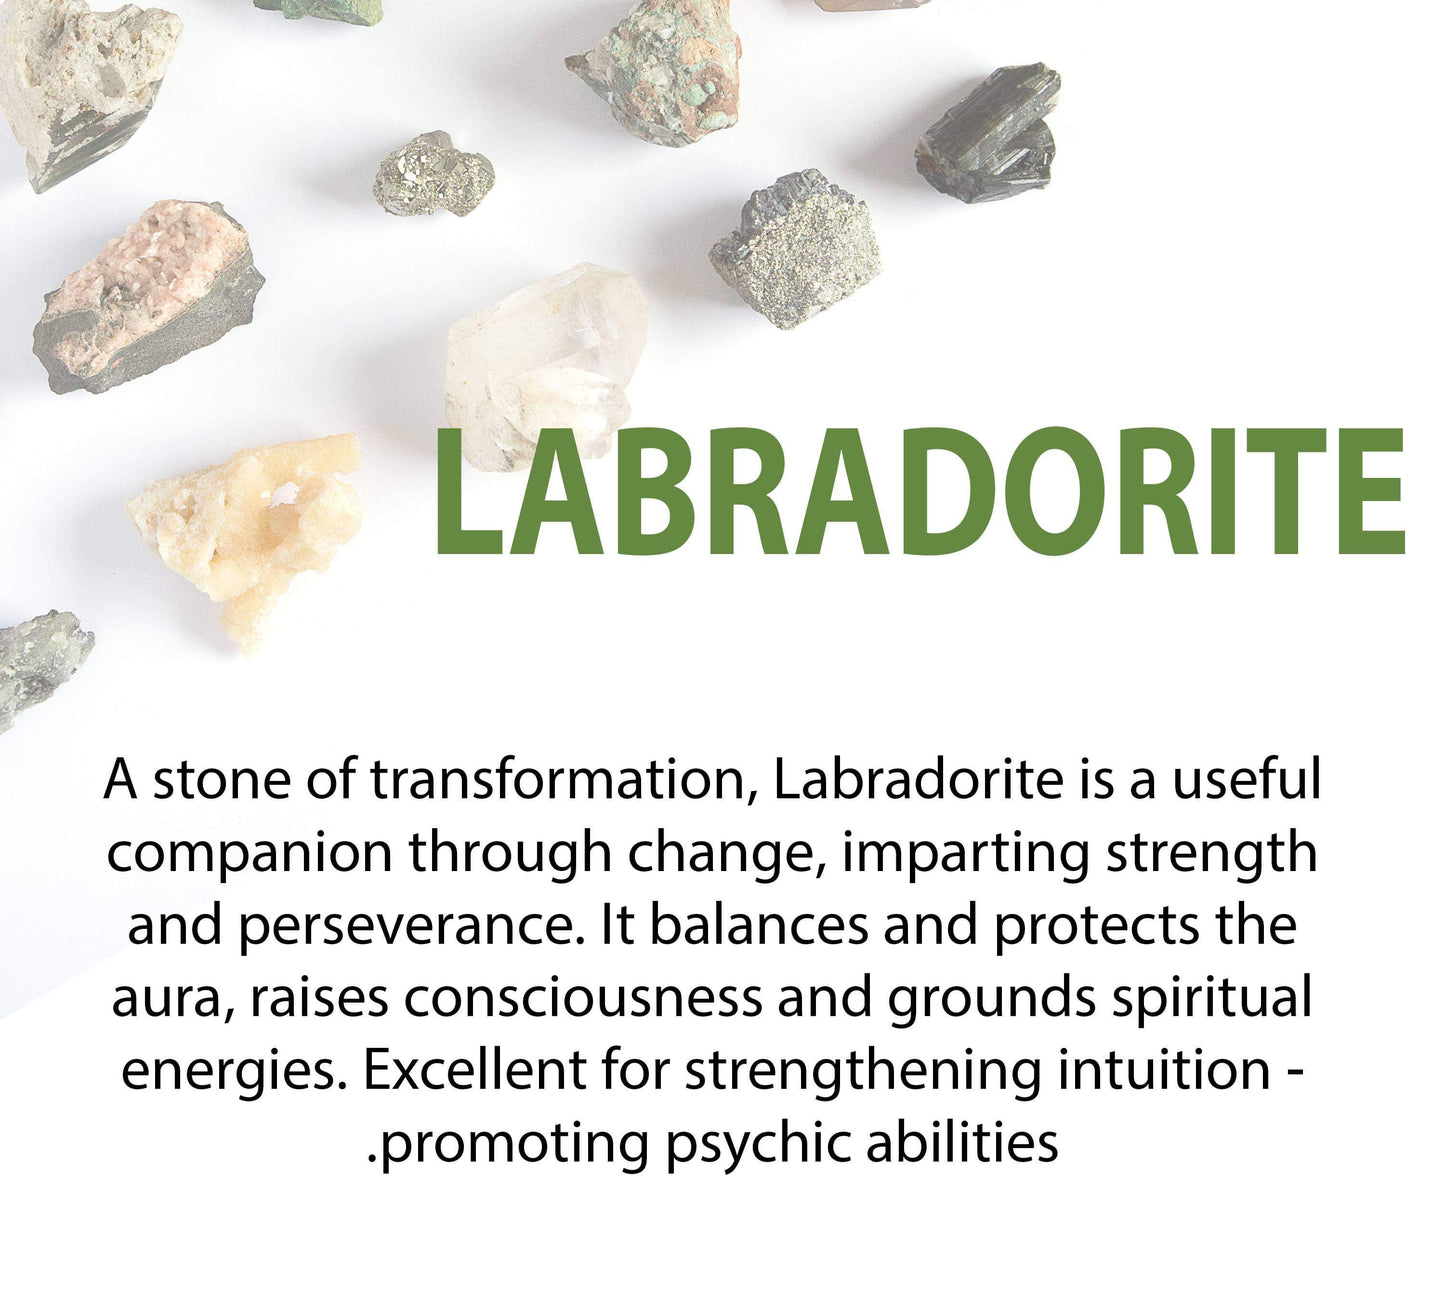 Labradorite gemstone bracelet - Gems & stones ph